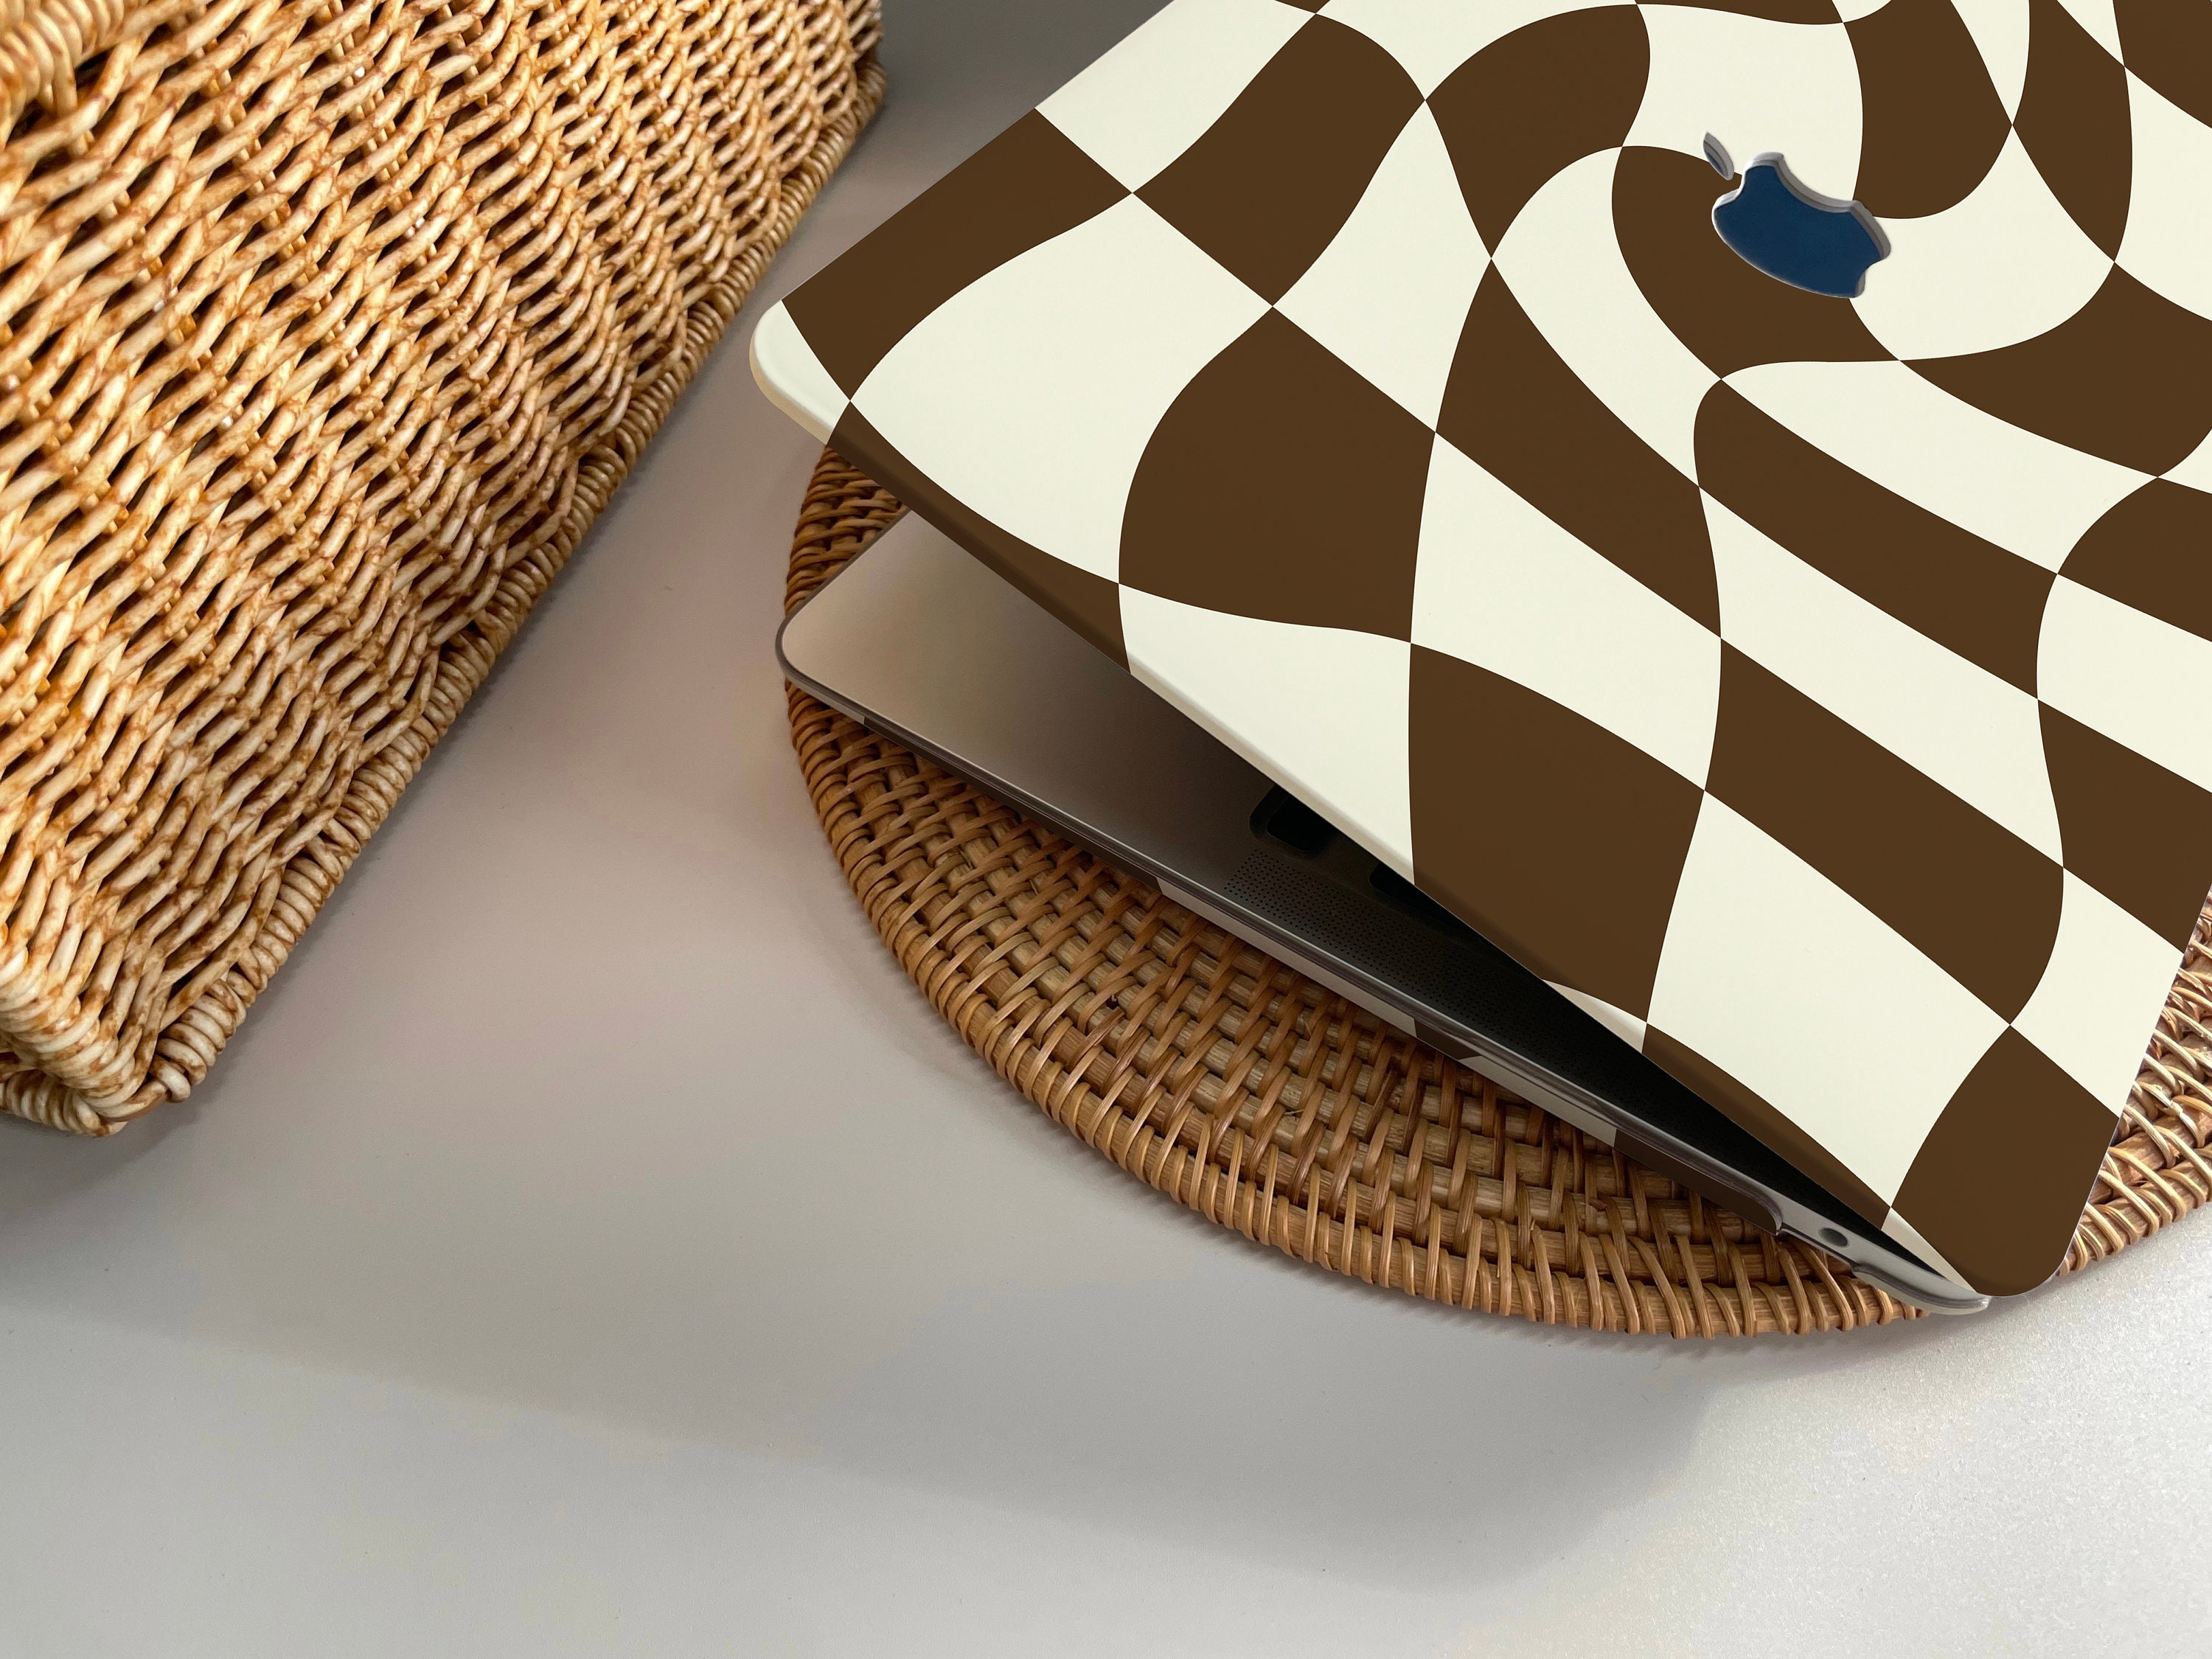 Brown Khaki Checkered Board Trendy MacBook Protective Hard 